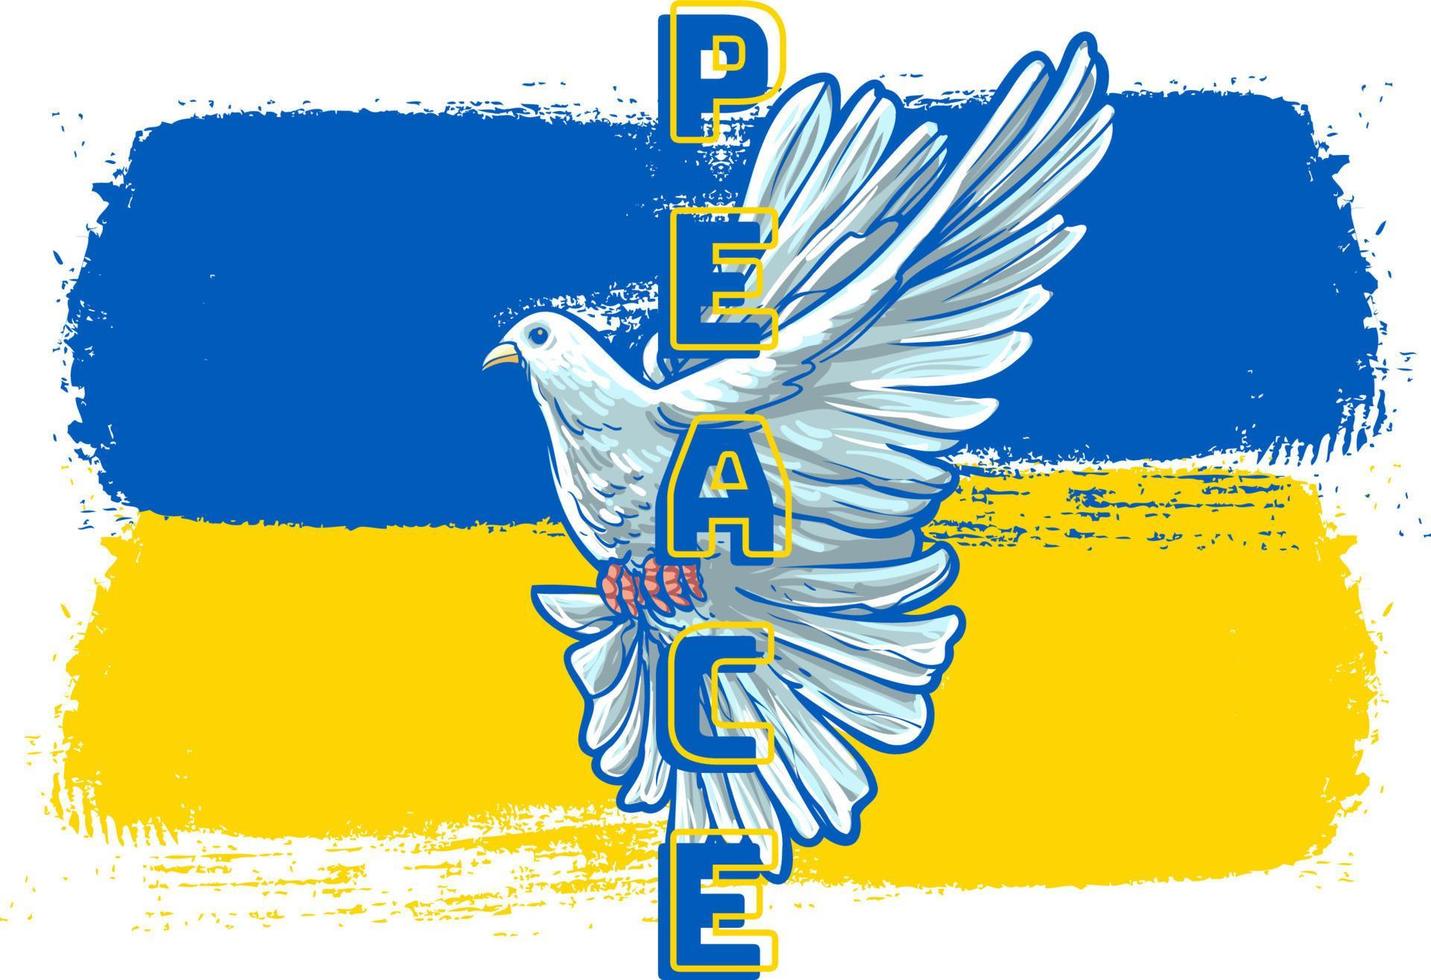 símbolo de paz de pomba branca voando sobre fundo amarelo azul vetor